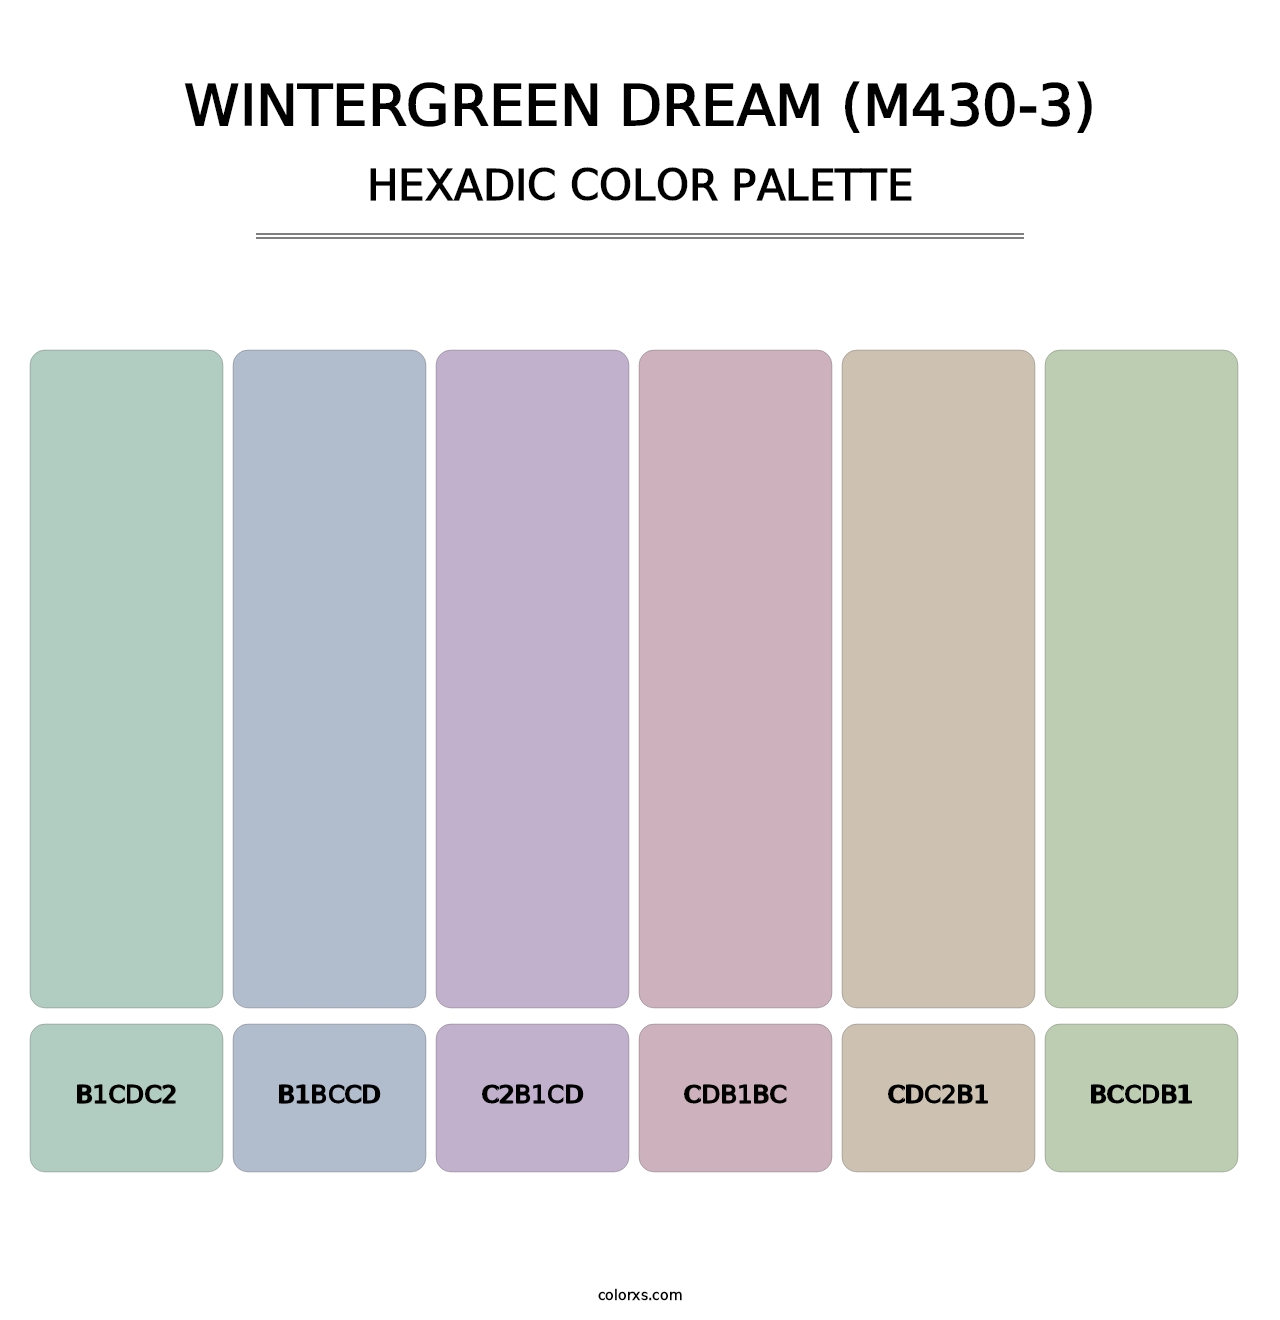 Wintergreen Dream (M430-3) - Hexadic Color Palette